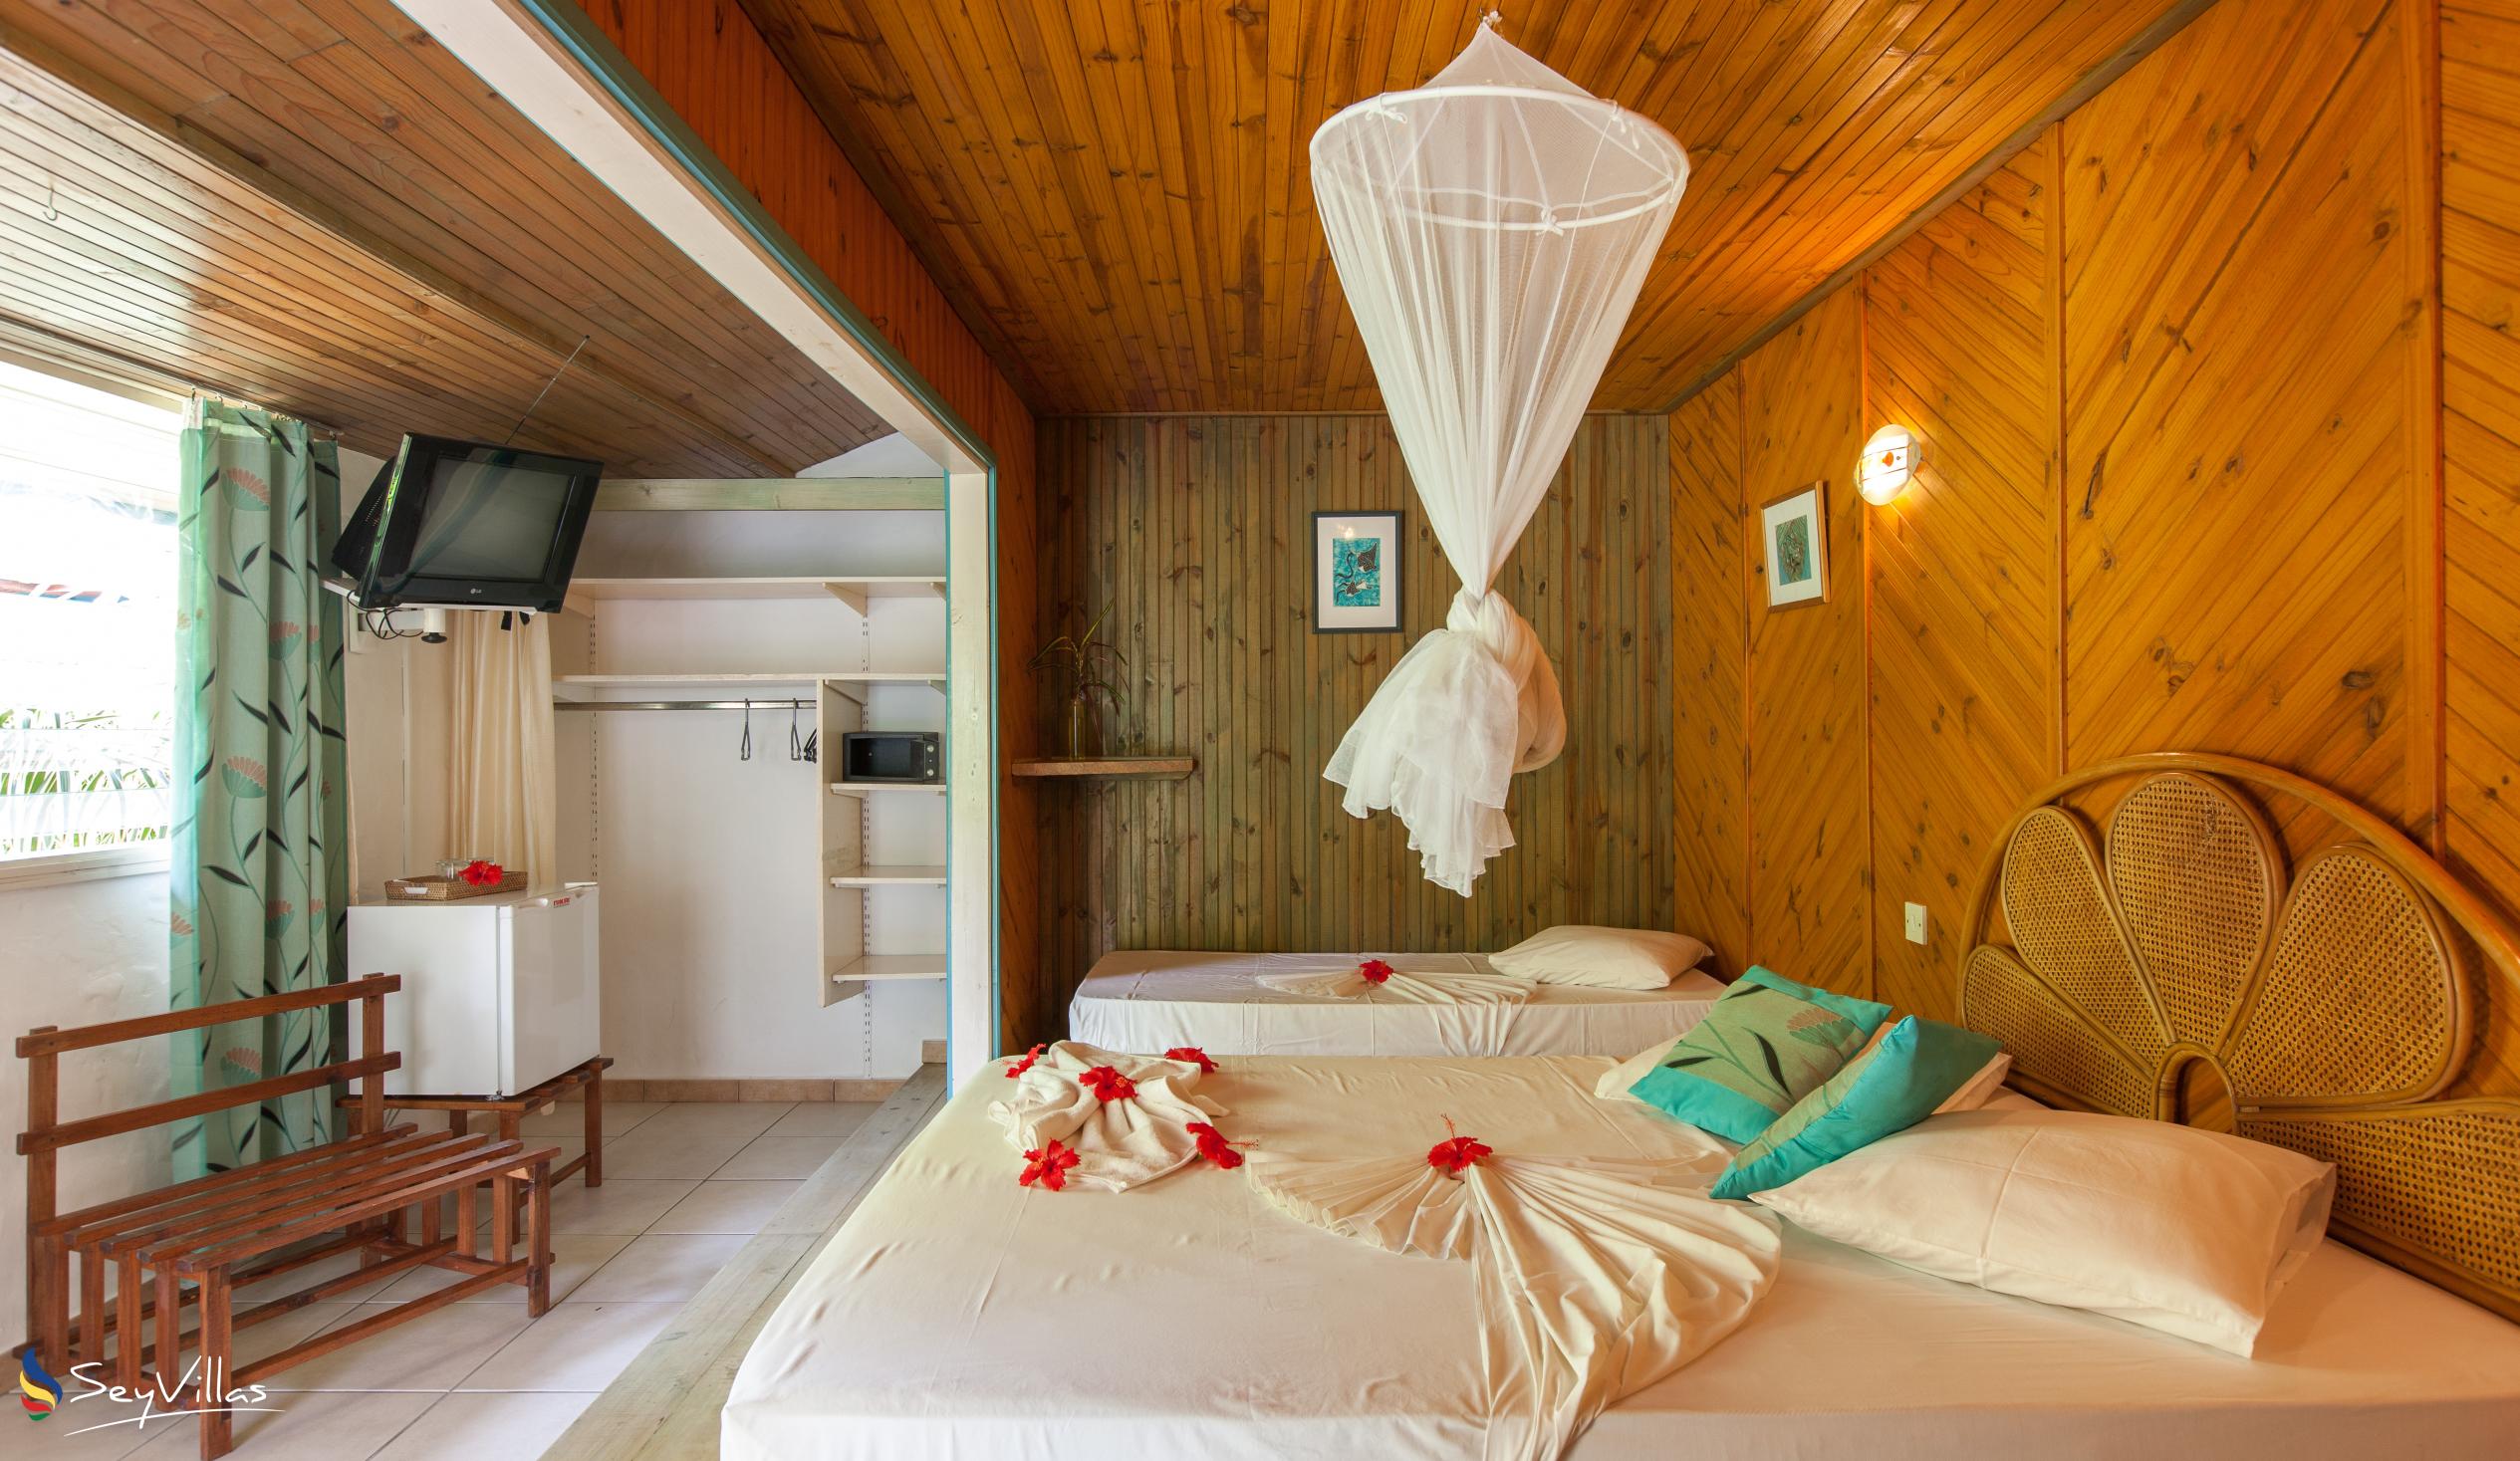 Photo 26: La Diguoise - Standard Room - La Digue (Seychelles)